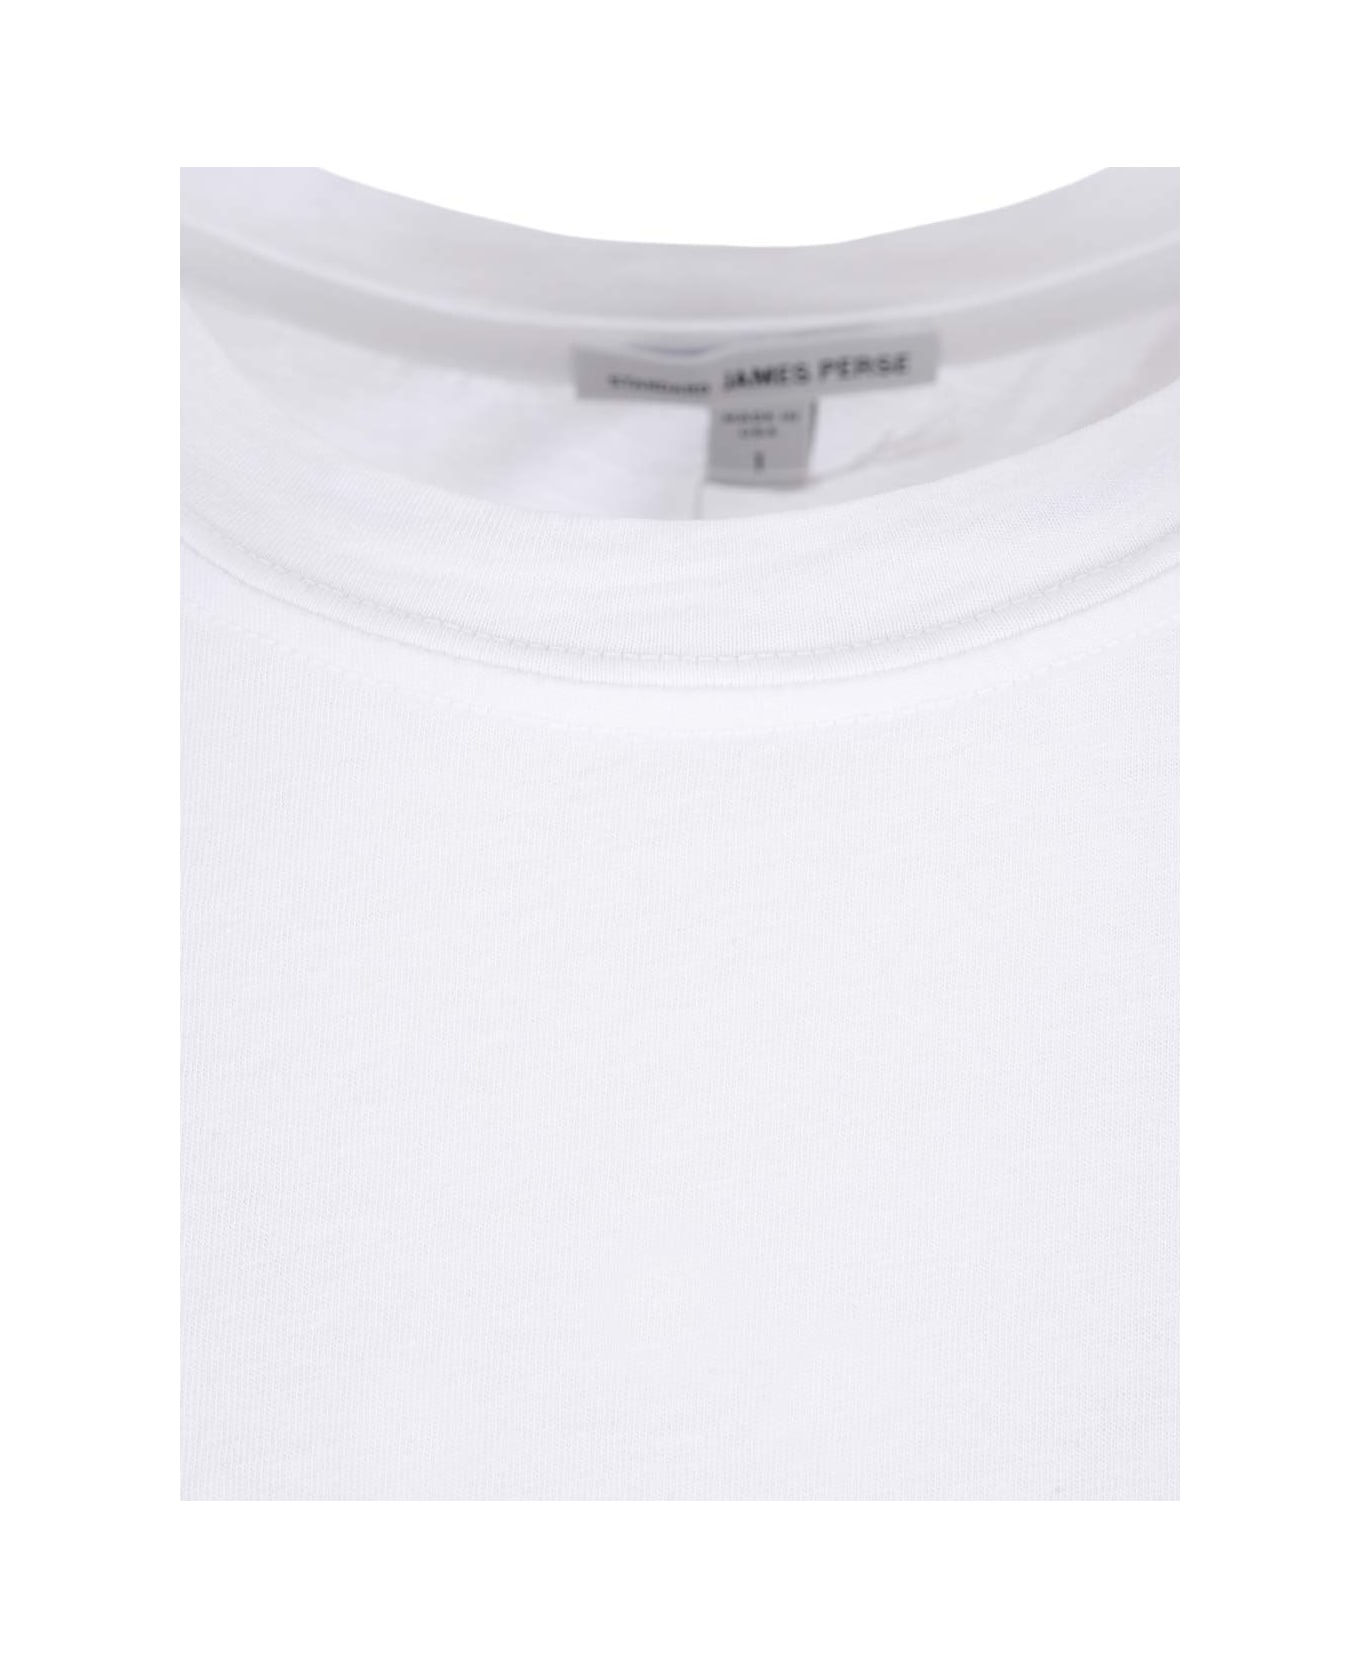 James Perse Basic T-shirt - Wht White Tシャツ